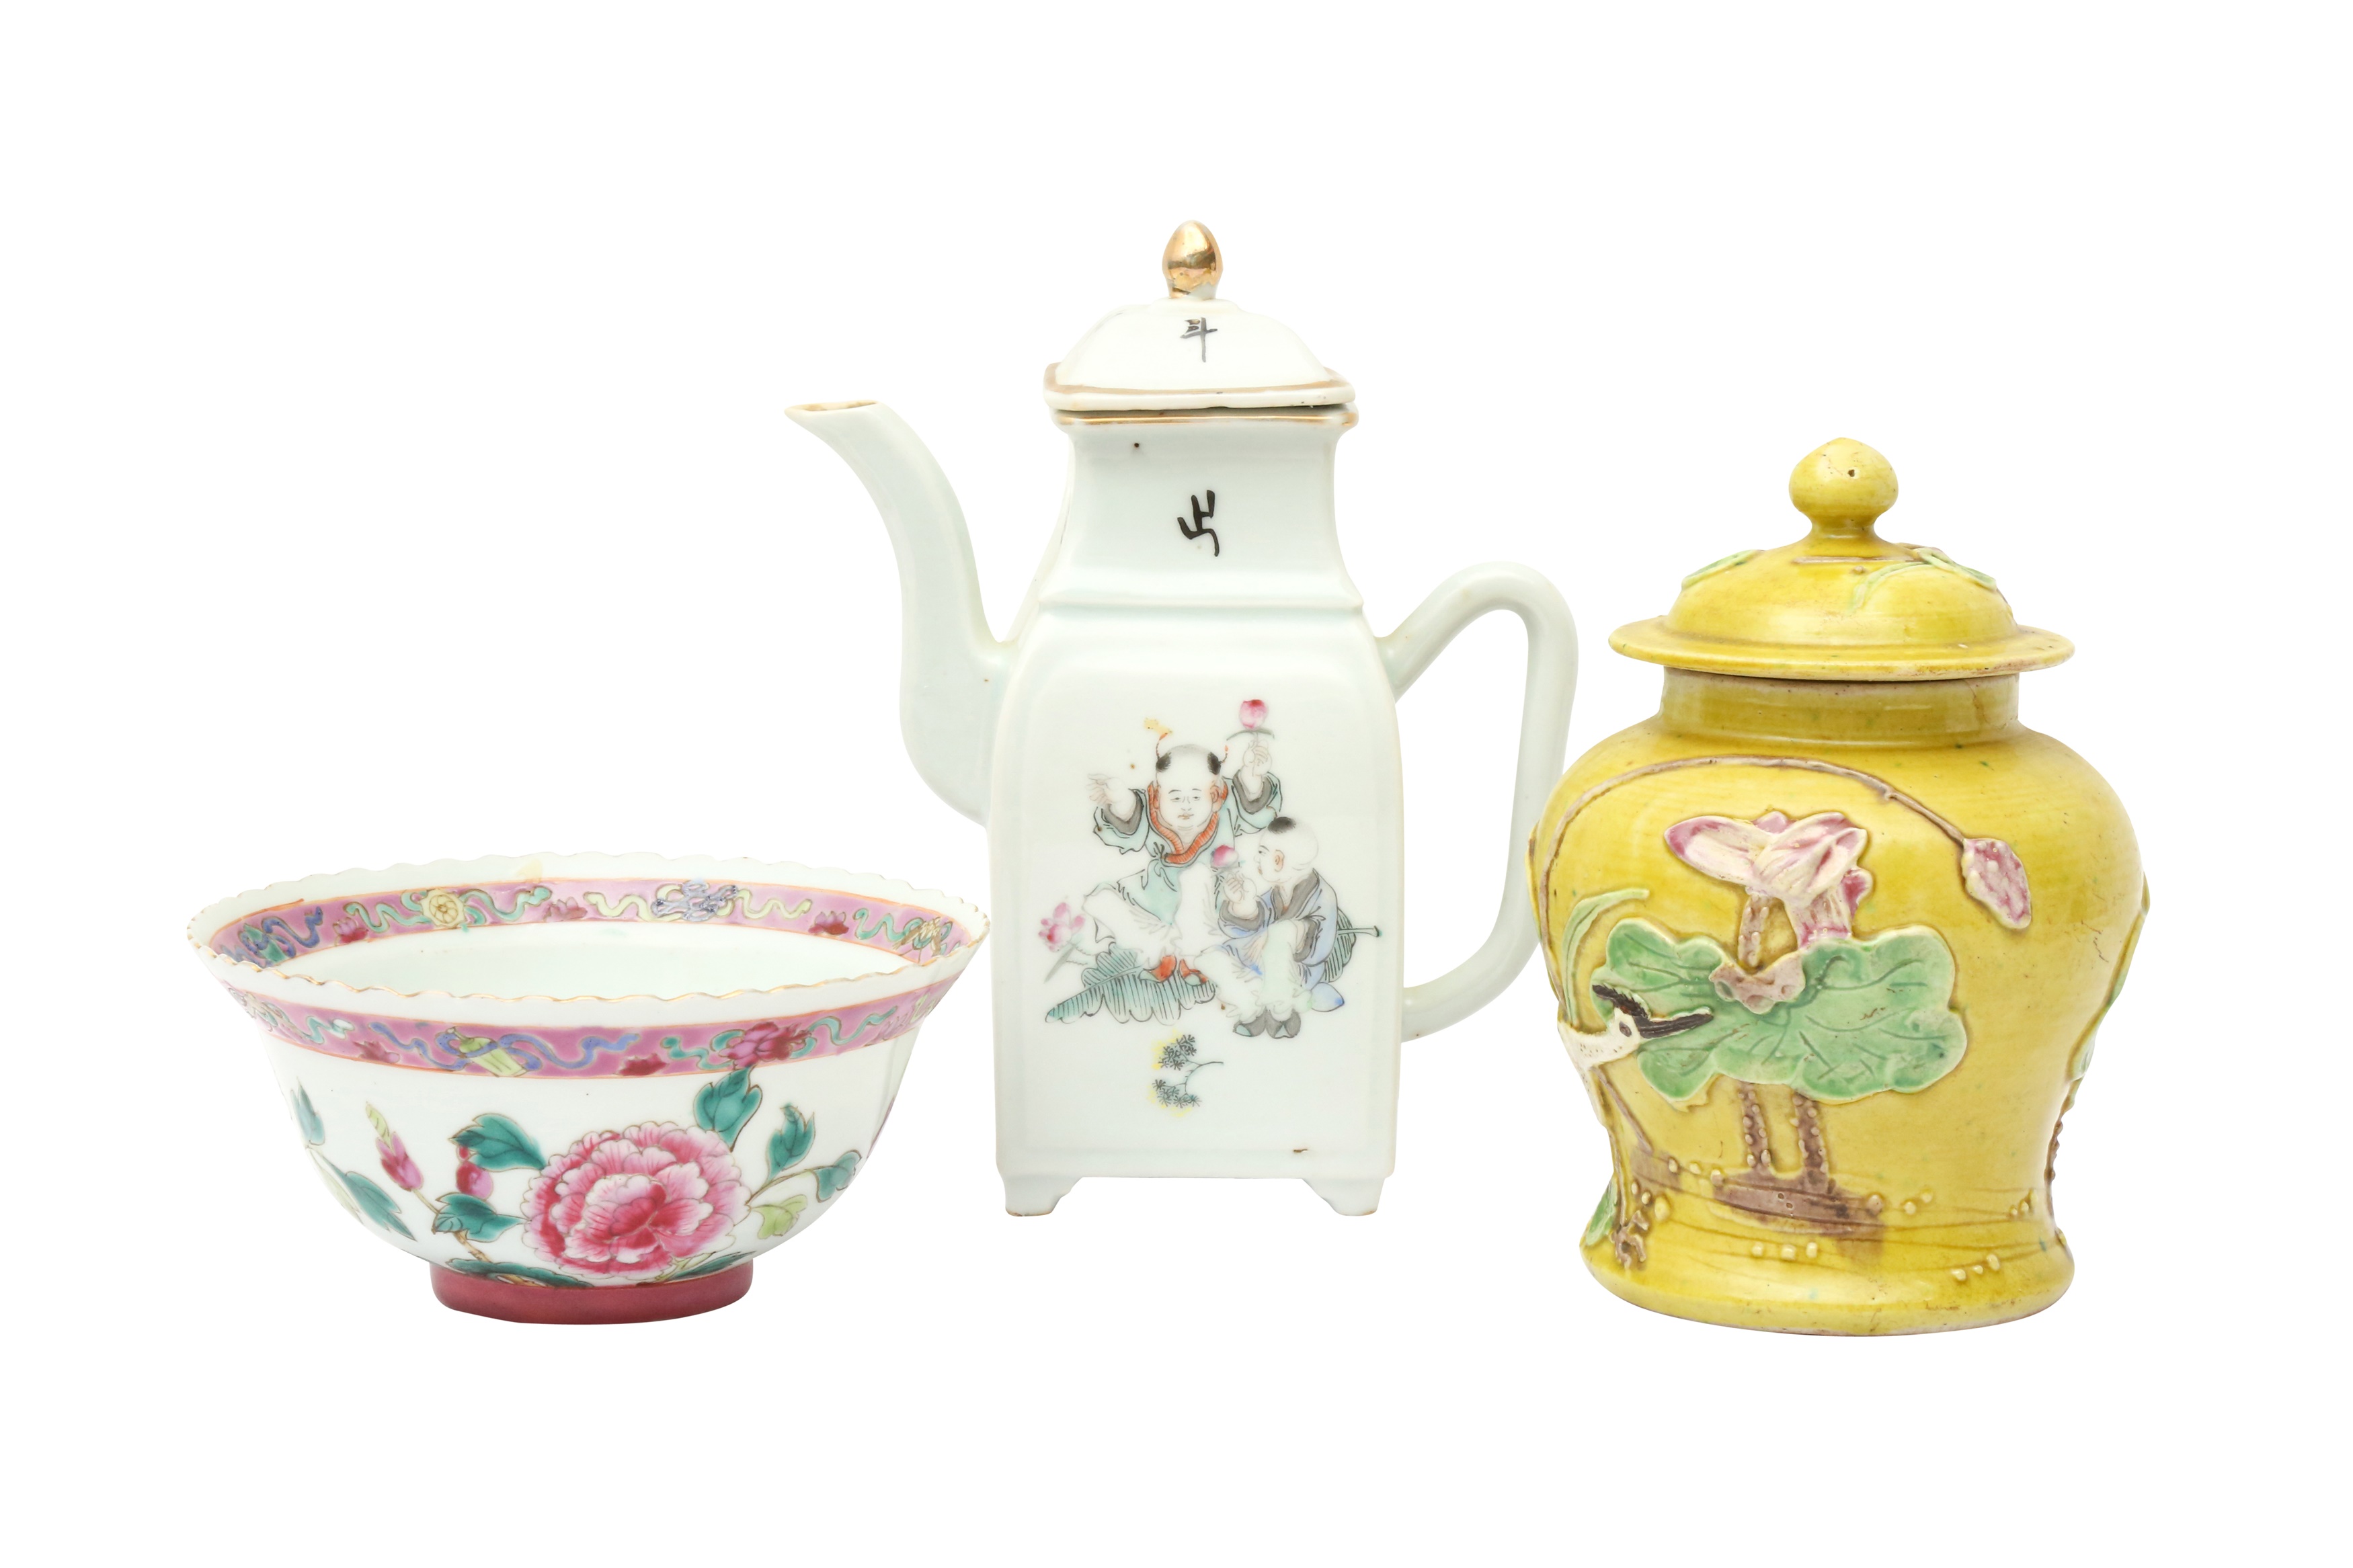 THREE CHINESE FAMILLE-ROSE CERAMICS 十九或二十世紀 粉彩瓷器三件